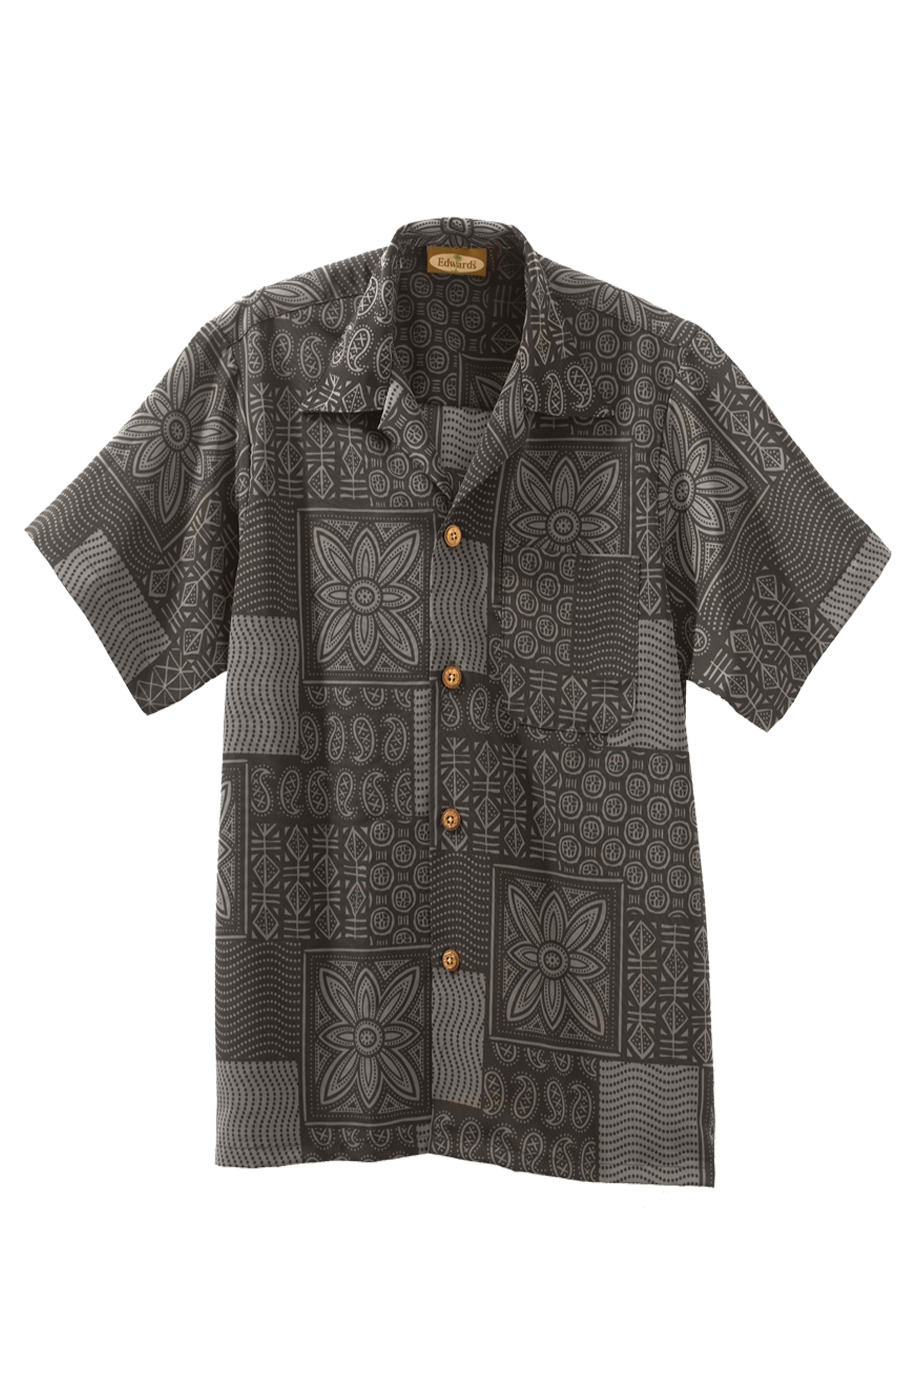 Edwards Garment 1019 - South Seas Geometric Print Camp Shirt